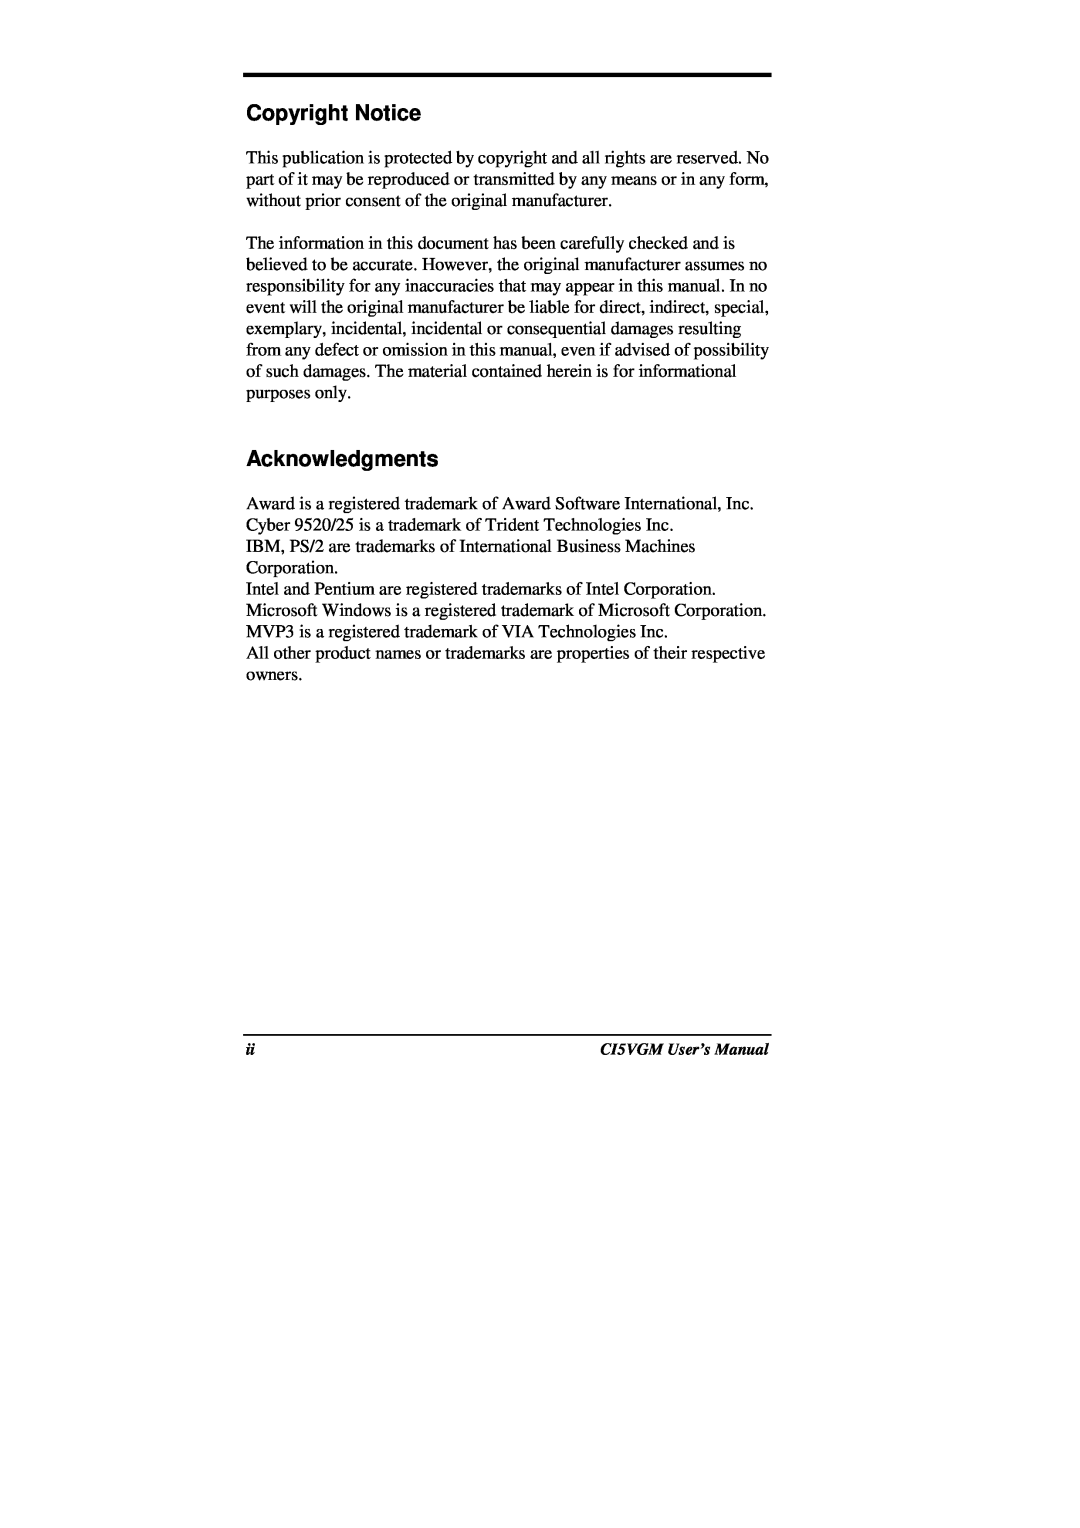 IBM CI5VGM Series user manual Copyright Notice, Acknowledgments, CI5VGM User’s Manual 